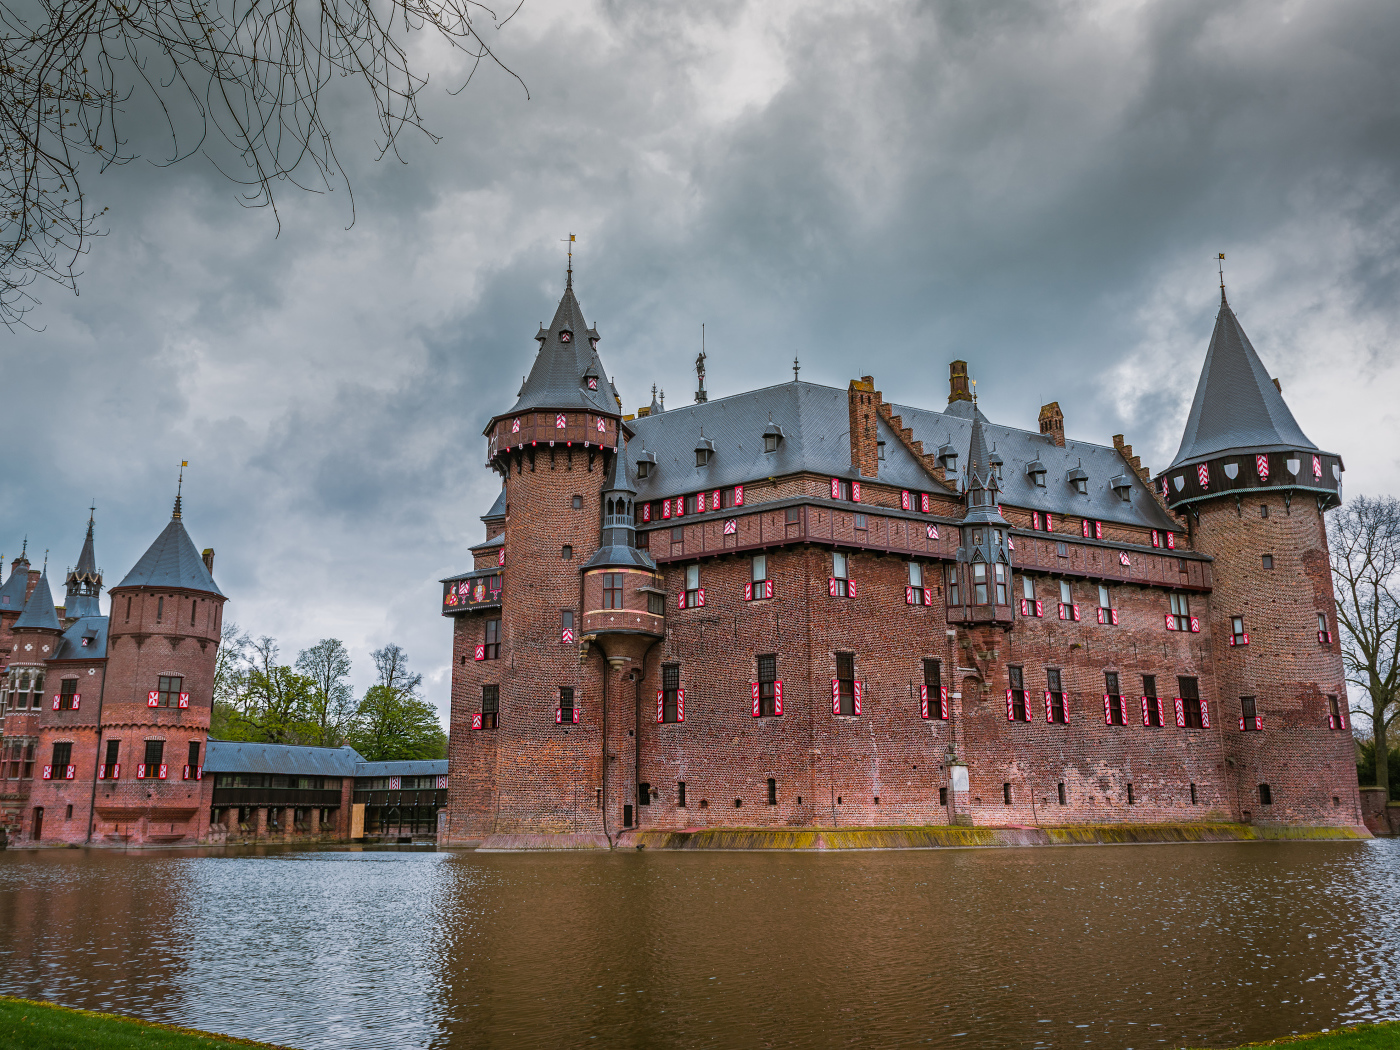 Пасмурное небо над замком Де-Хаар, Нидерланды